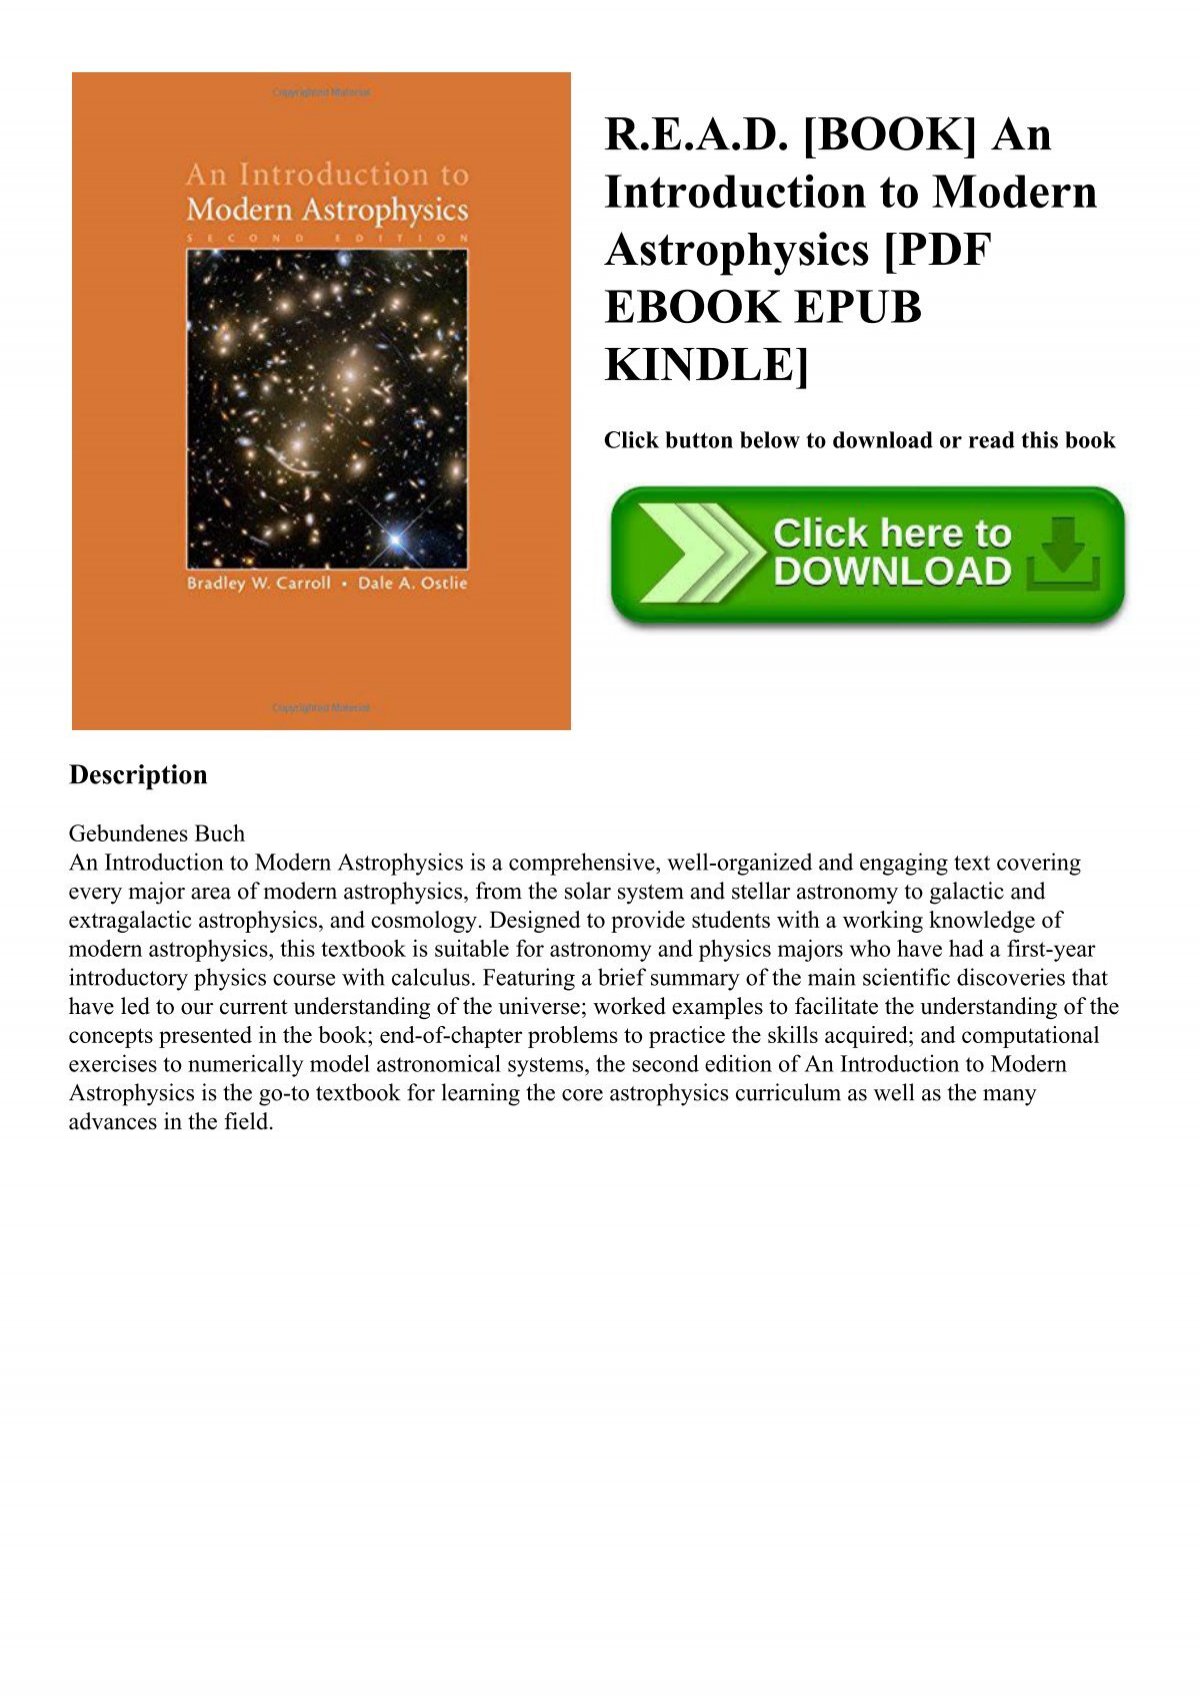 R E A D Book An Introduction To Modern Astrophysics Pdf Ebook Epub Kindle